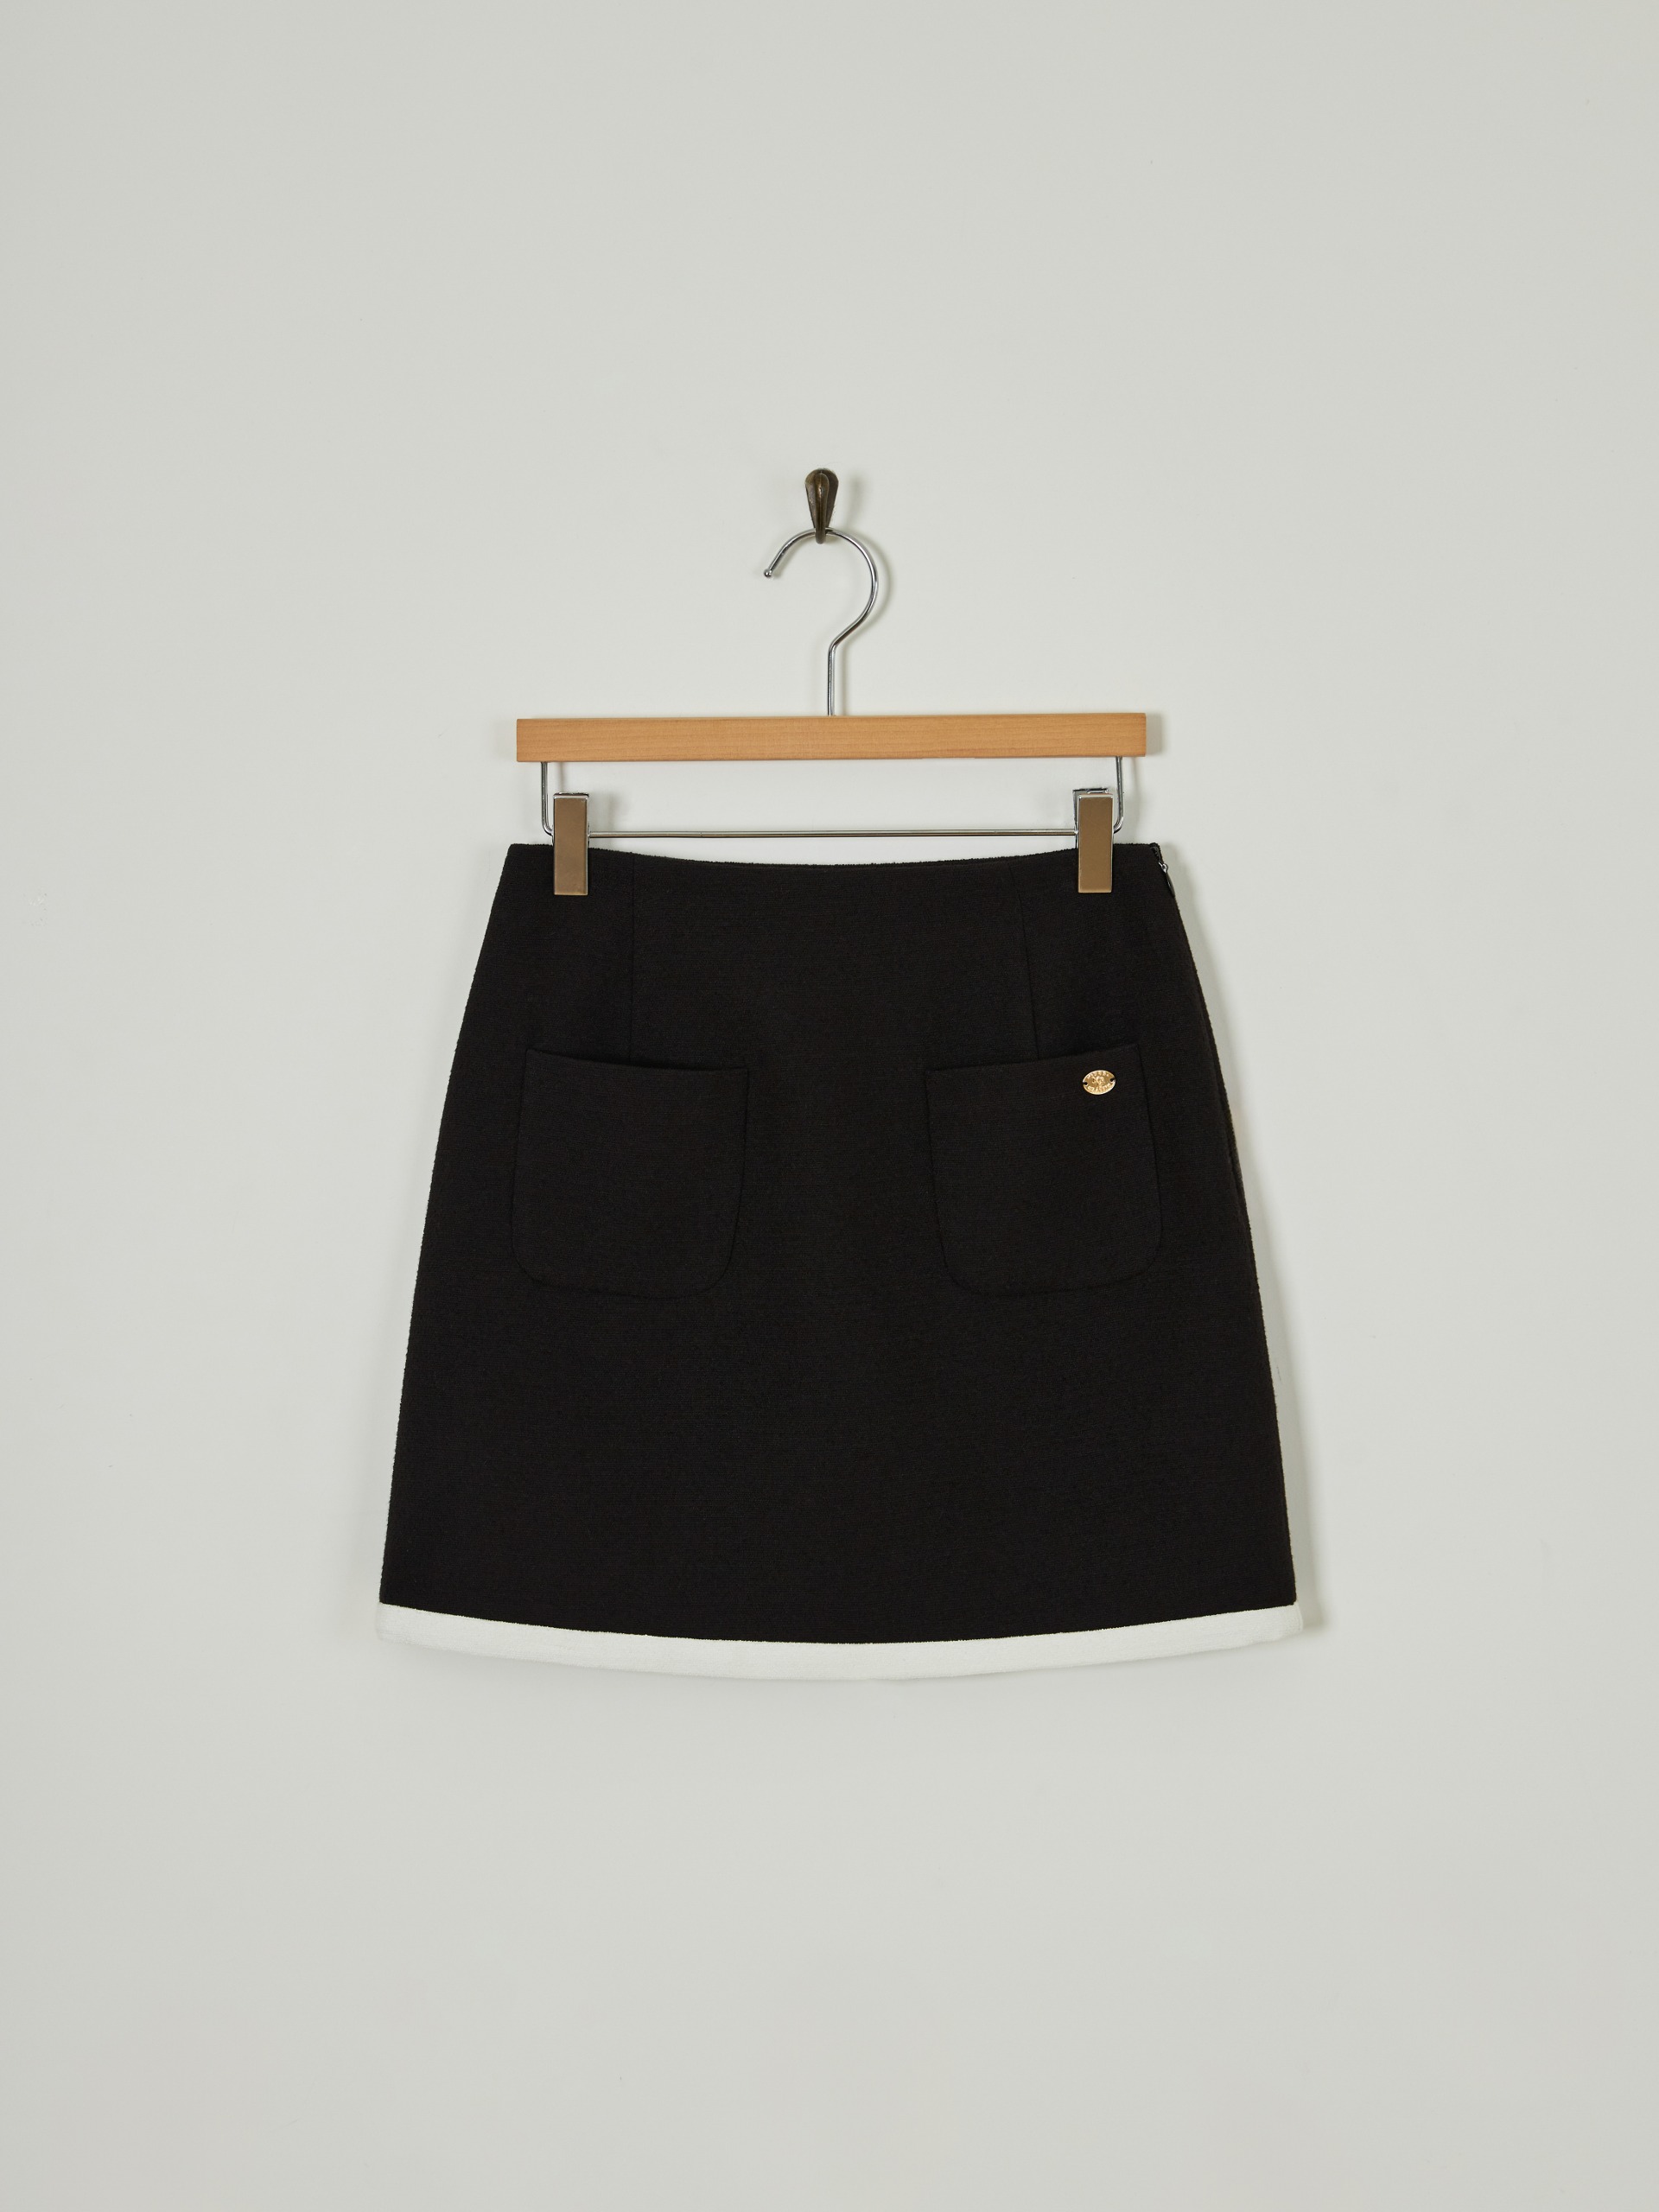 objet tweed skirt [BLACK][Departure today]